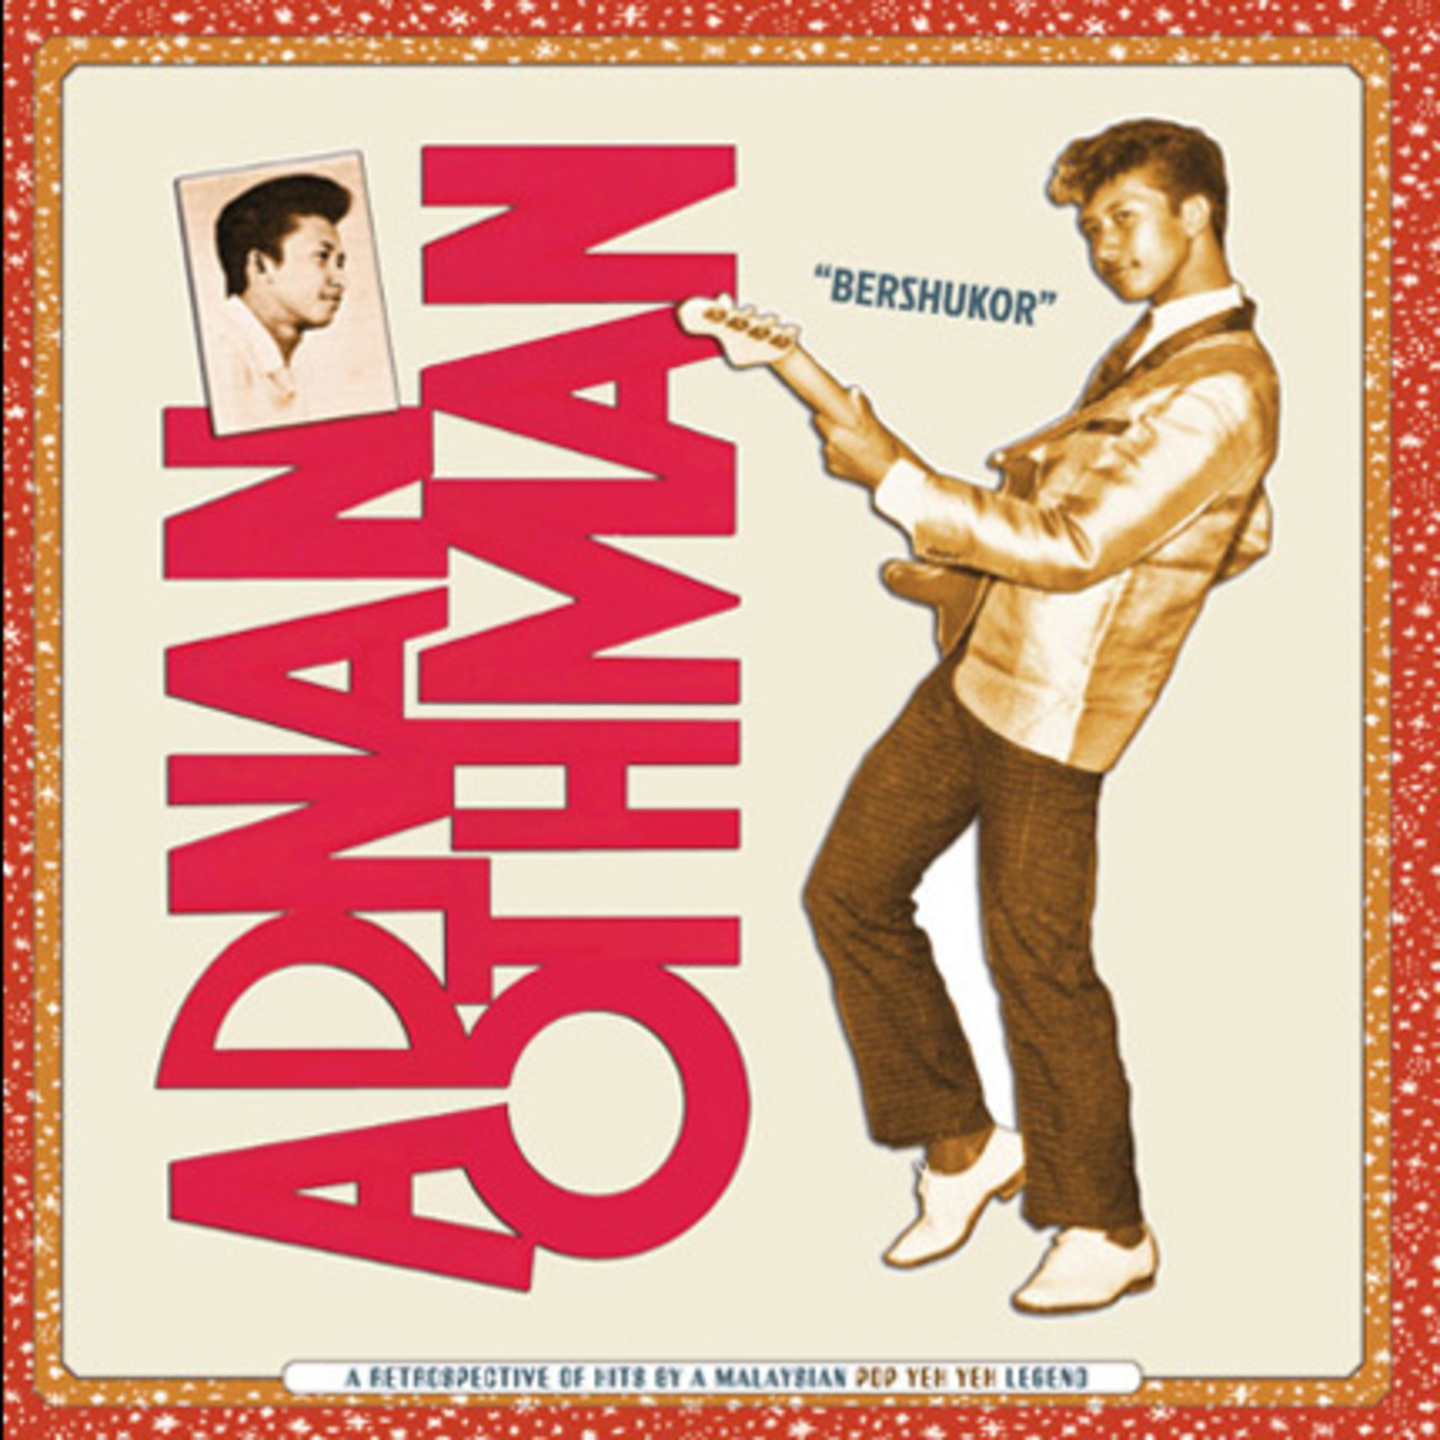 ADNAN OTHMAN - Bershukor A Retrospective of Hits by a Malaysian Pop Yeh Yeh Legend 2xLP